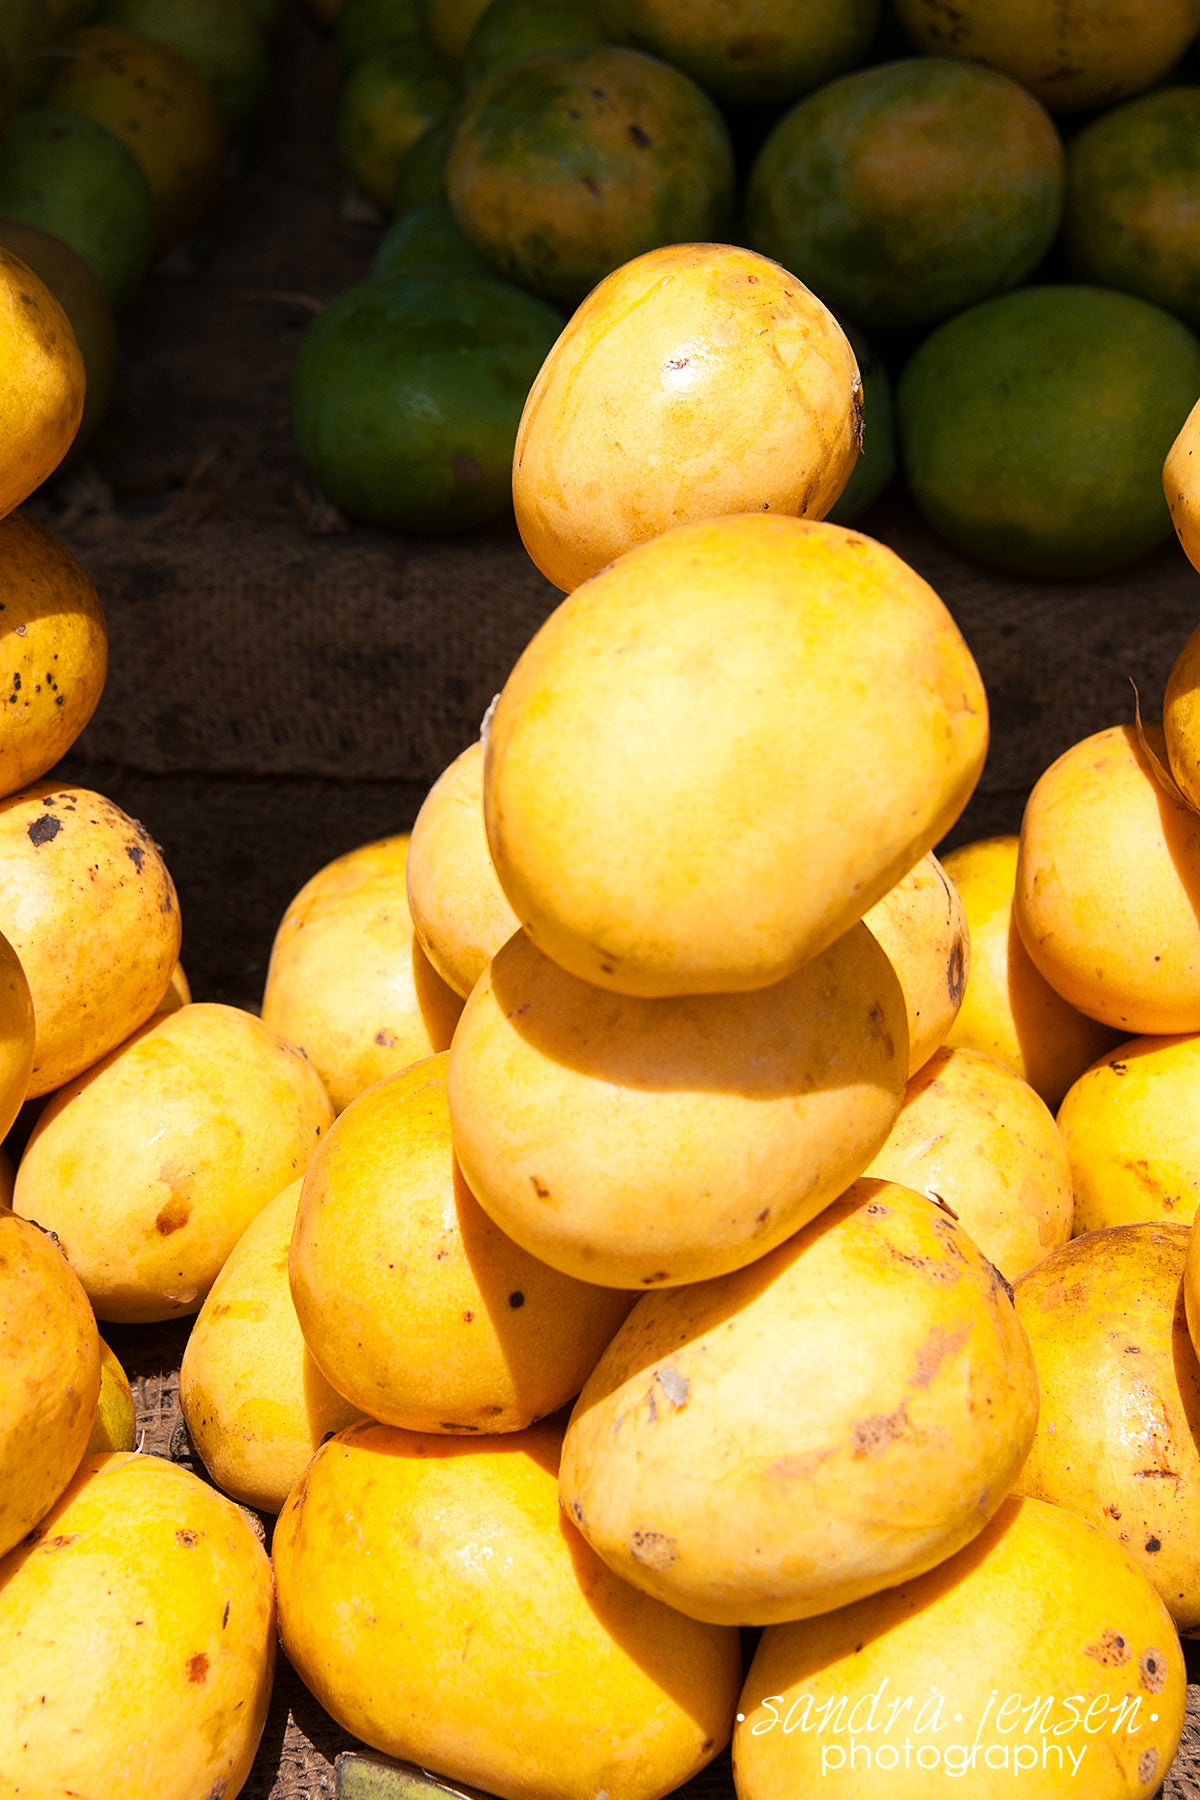 Print - Zanzibar, Tanzania - Mangoes in Market Stall in Stonetown